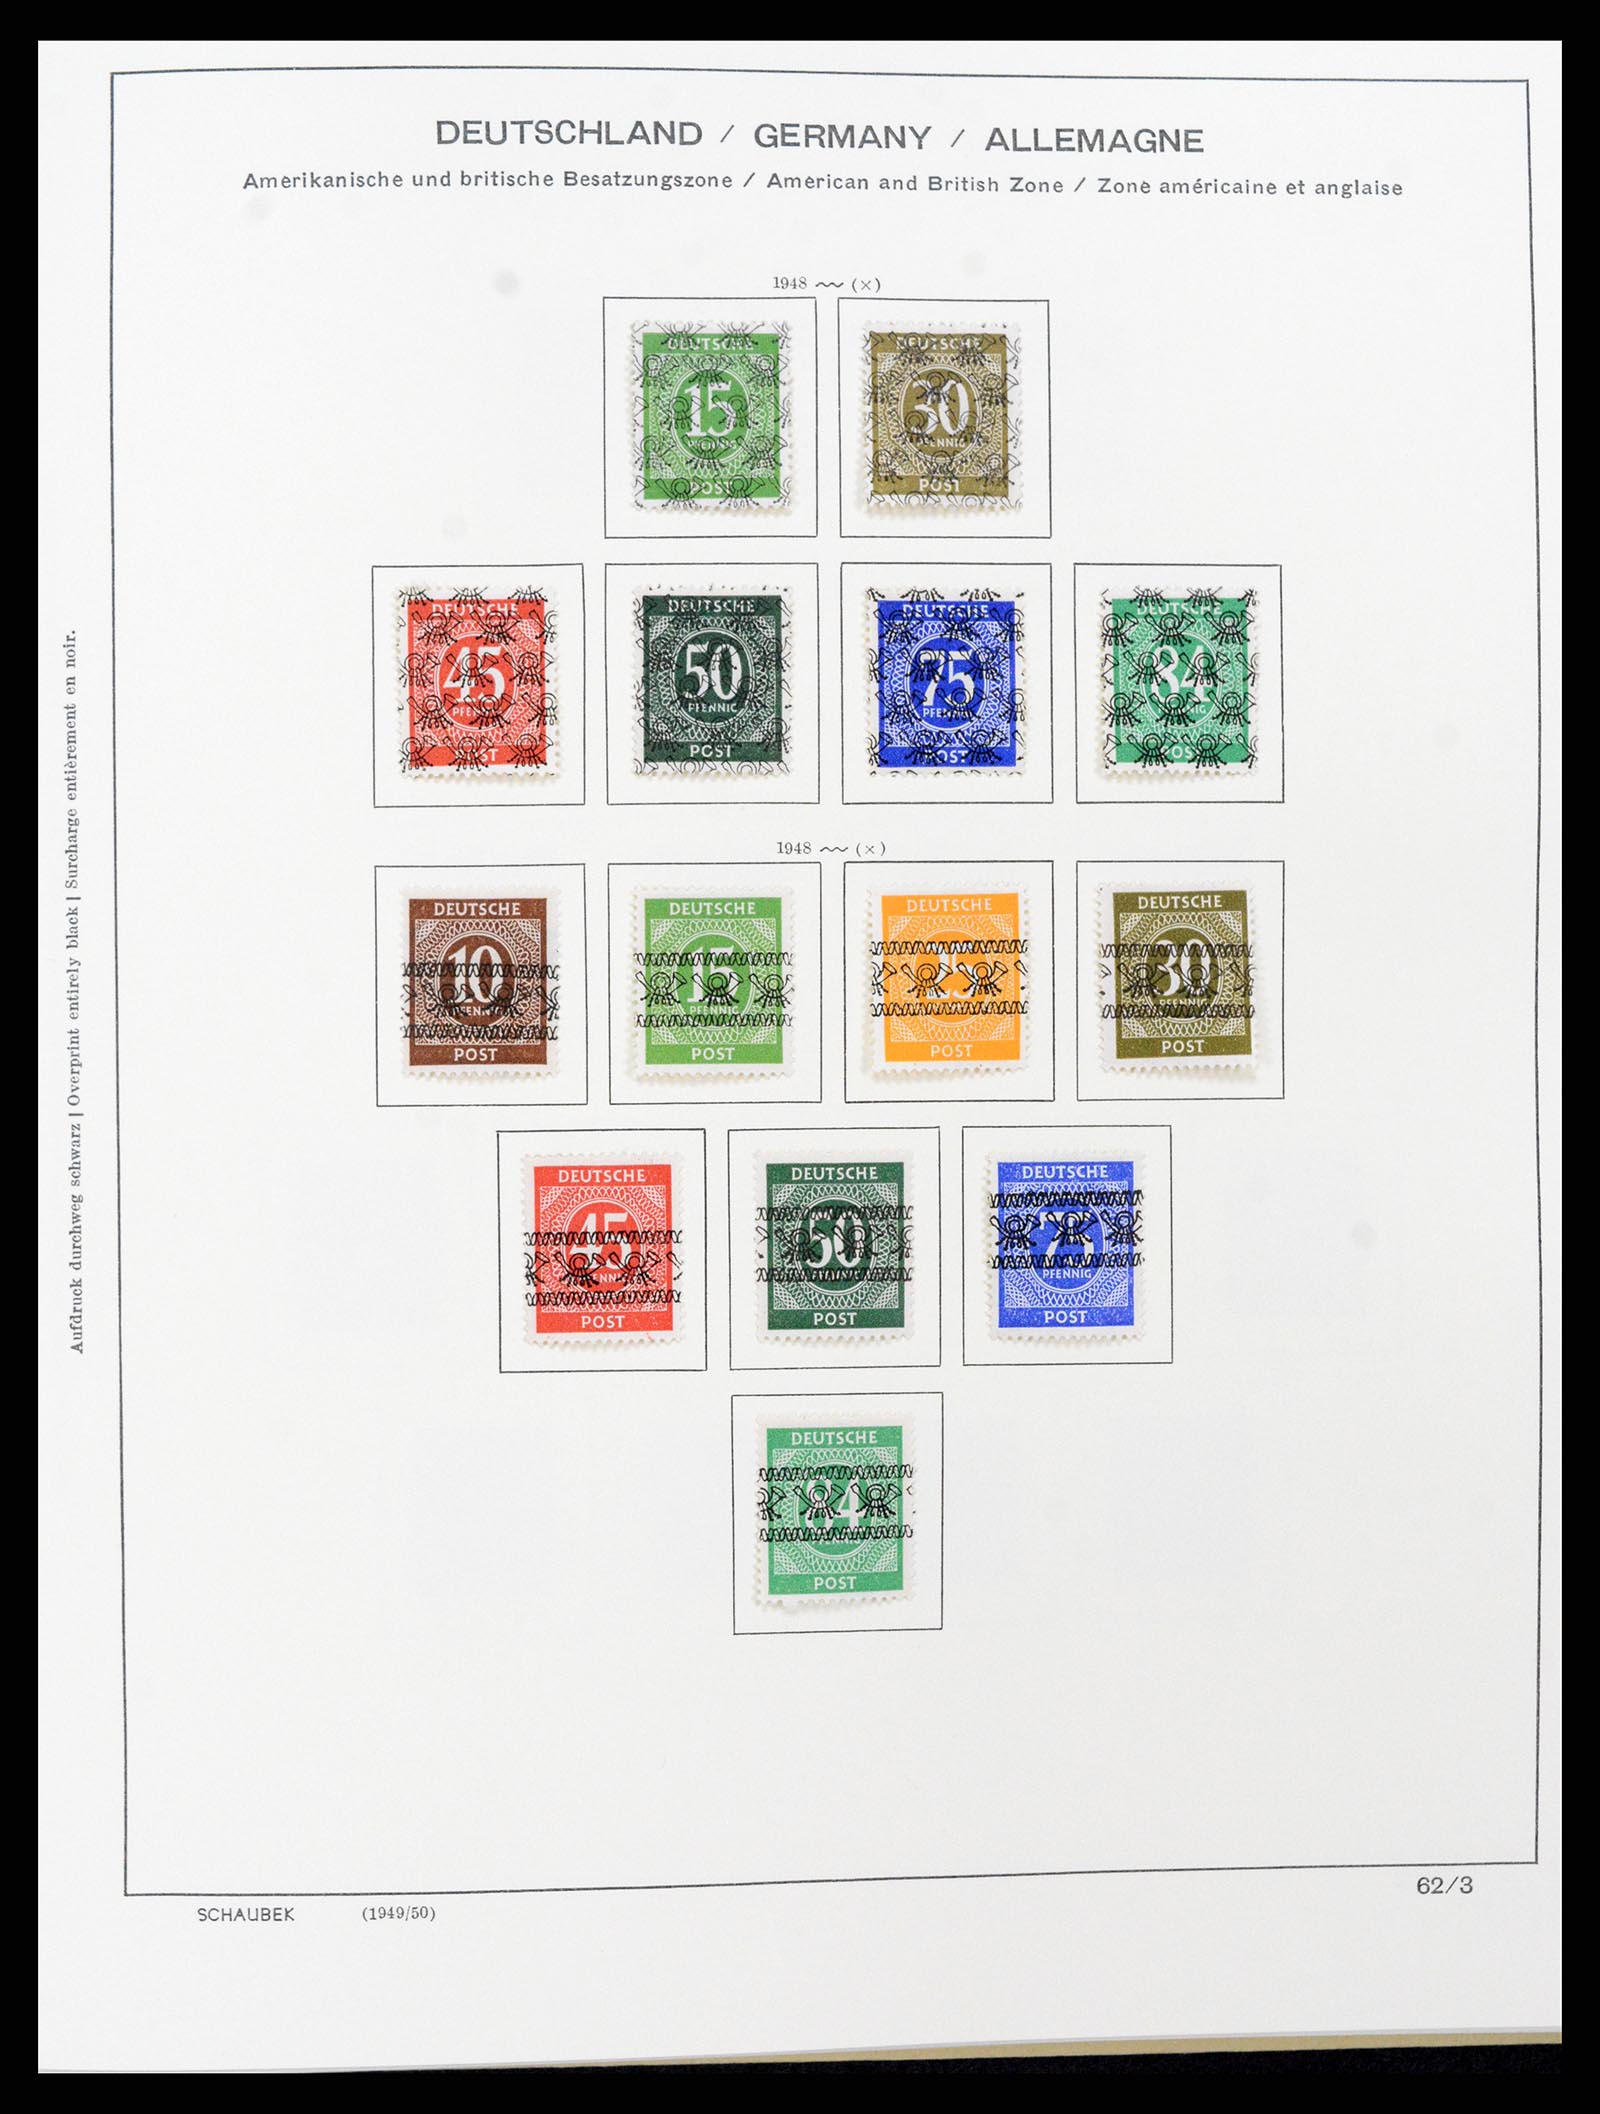 37645 011 - Stamp collection 37645 German Zones 1945-1949.